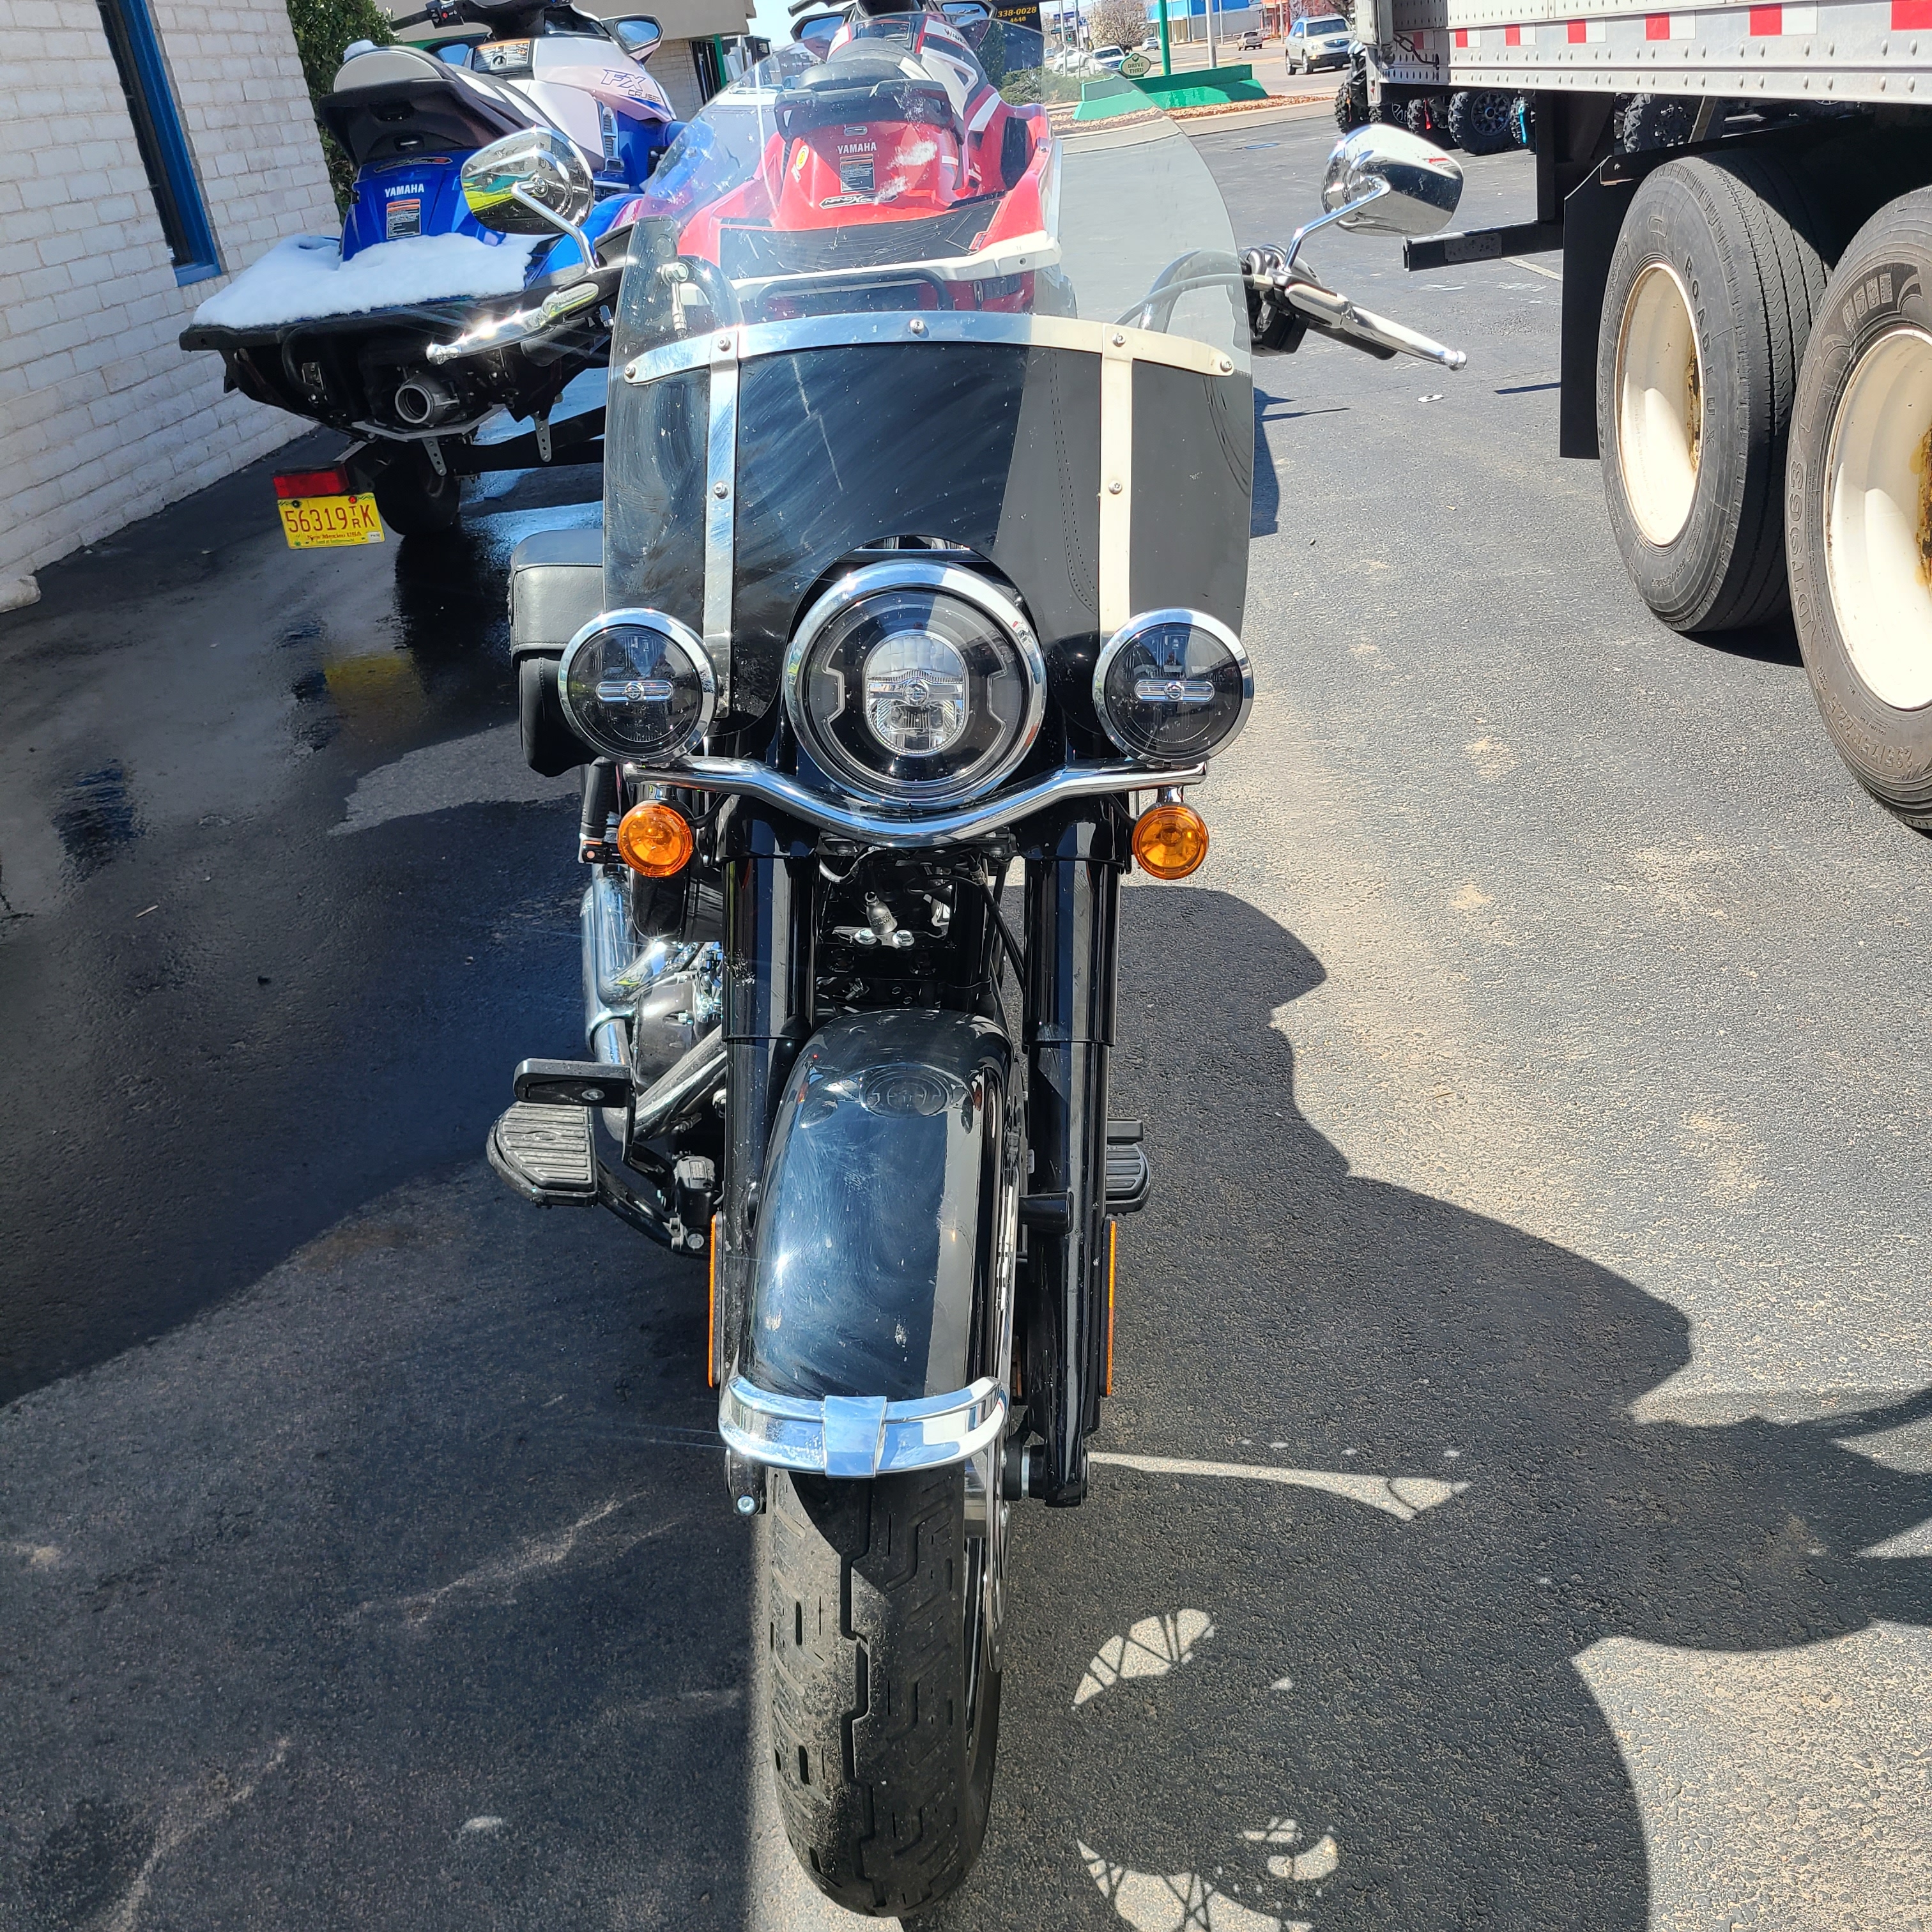 2019 Harley-Davidson Softail Heritage Classic at Bobby J's Yamaha, Albuquerque, NM 87110